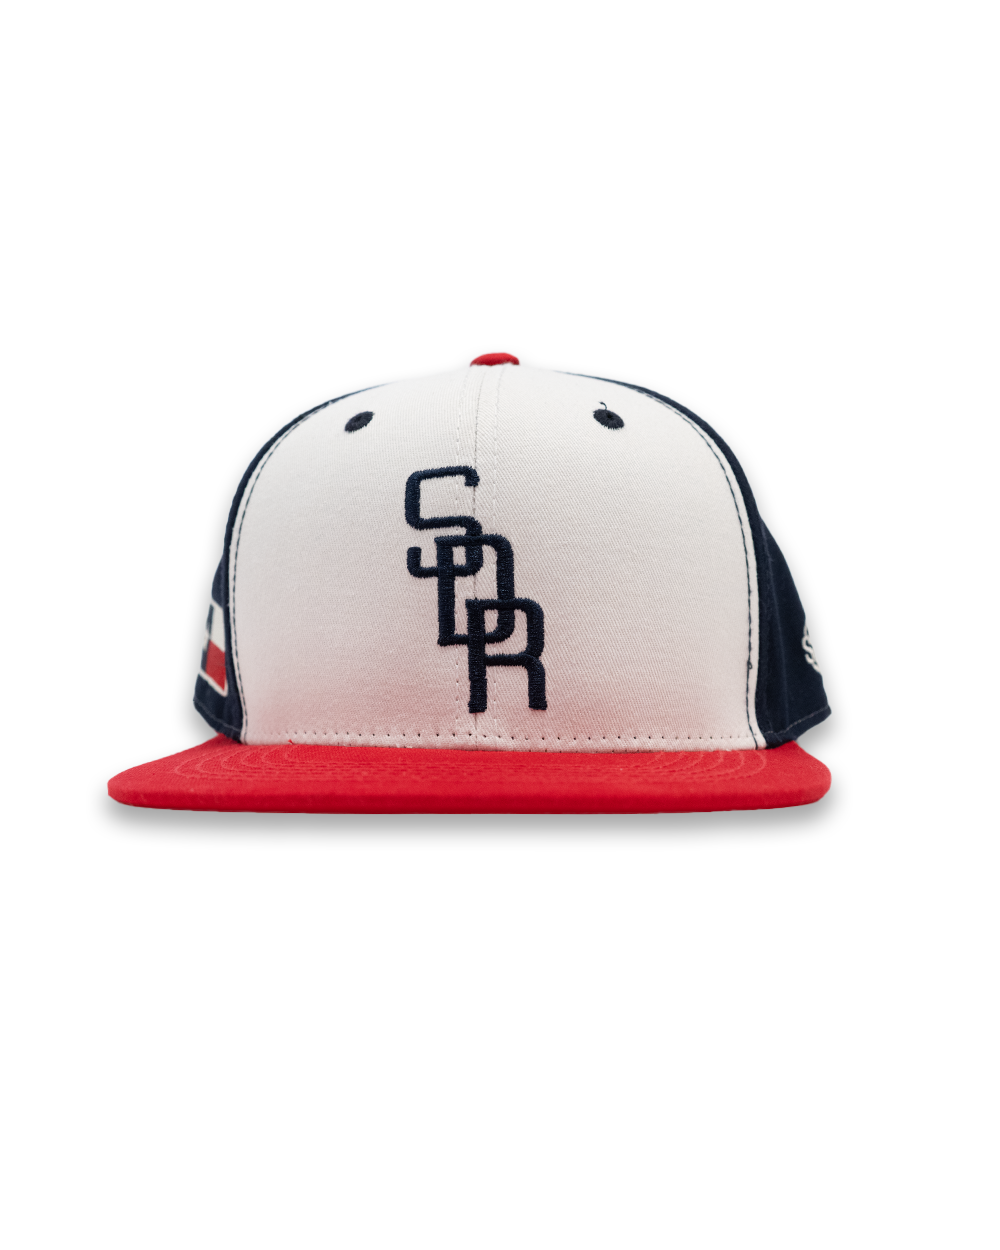 SDR Texas Baseball Hat